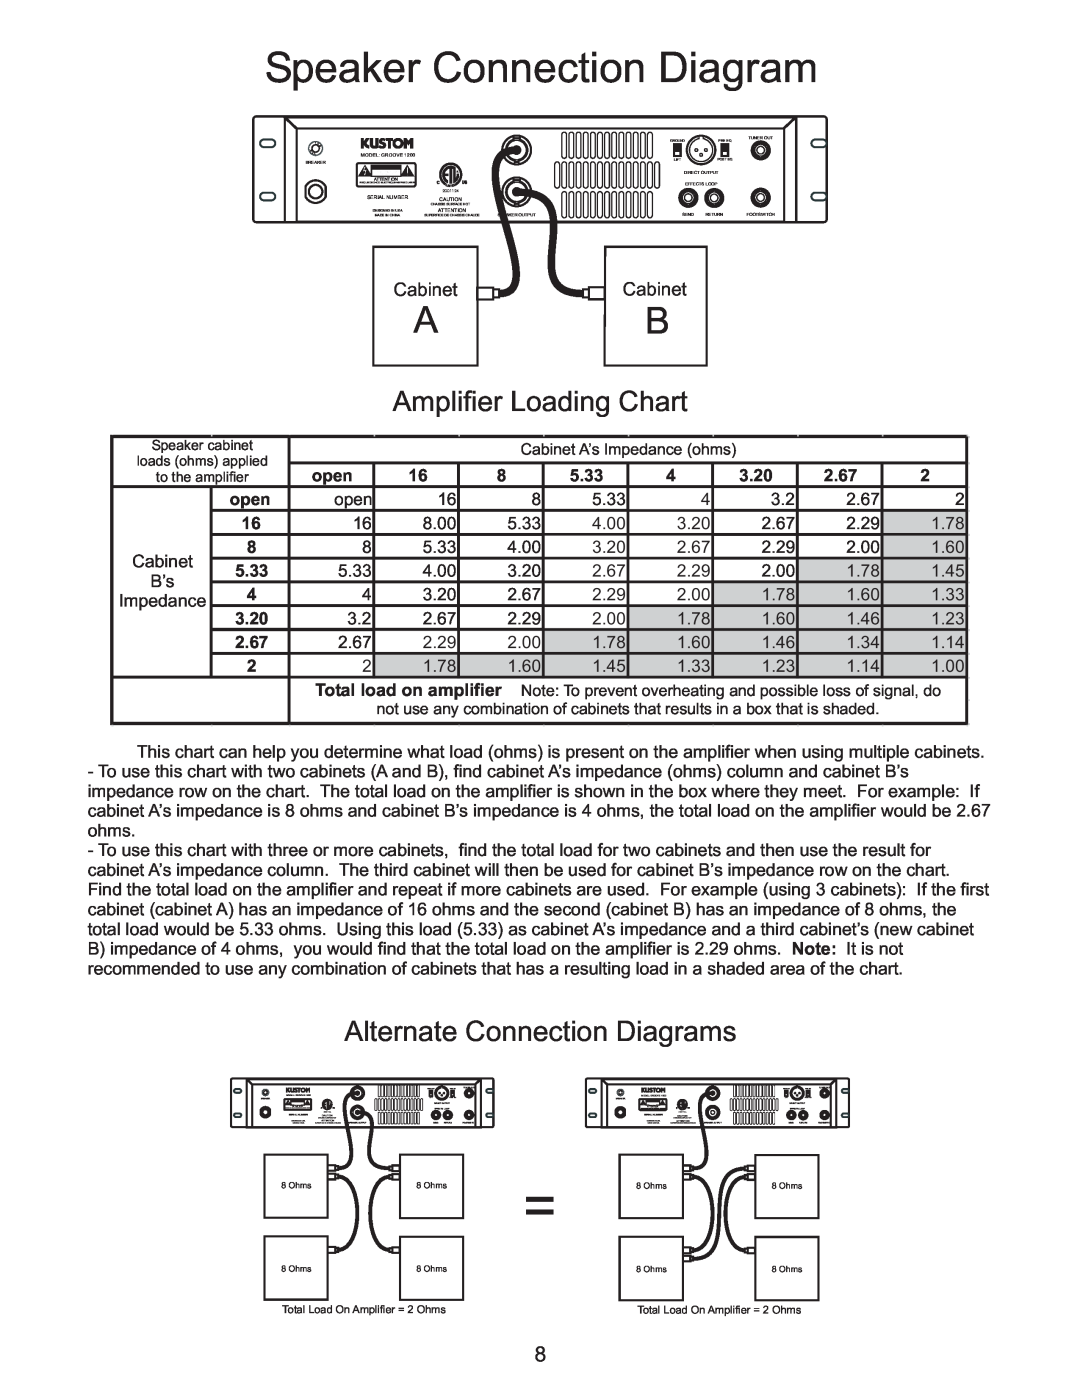 Kustom GROOVE 1200 Speaker Connection Diagram, Amplifier Loading Chart, Alternate Connection Diagrams, open, 5.33, 3.20 